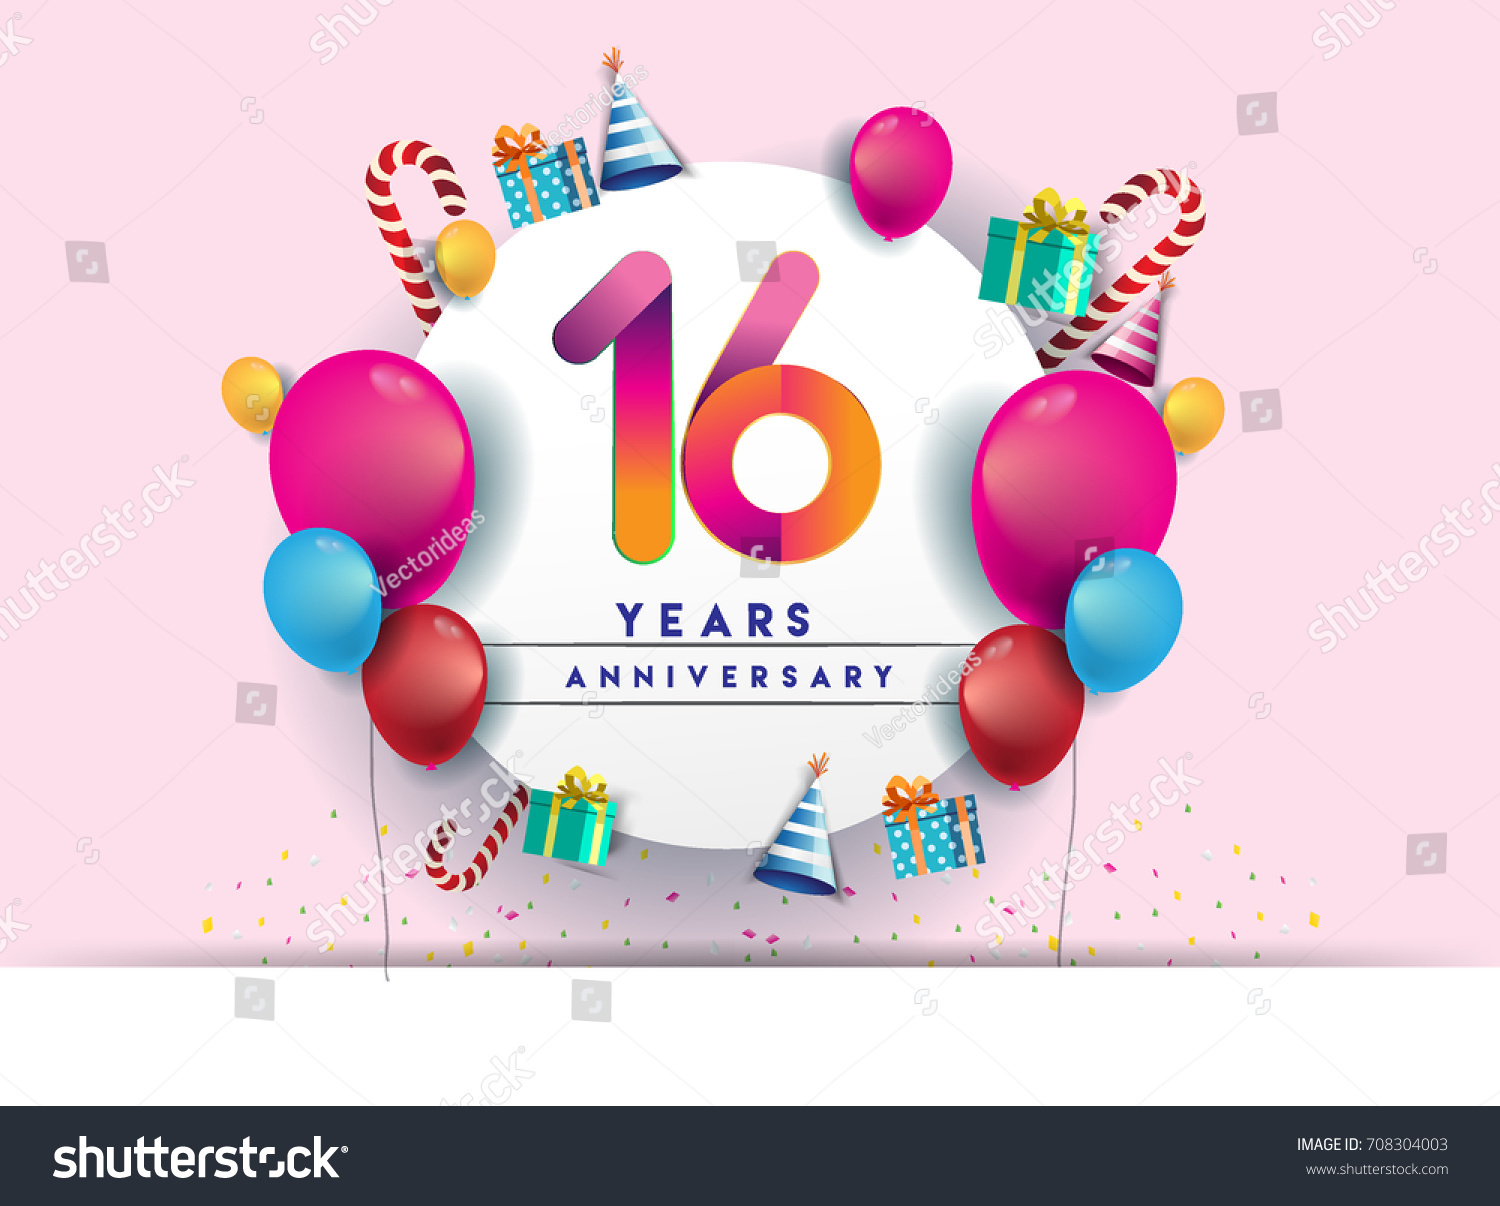 16th Years Anniversary Celebration Design Balloons Stock Vector ...